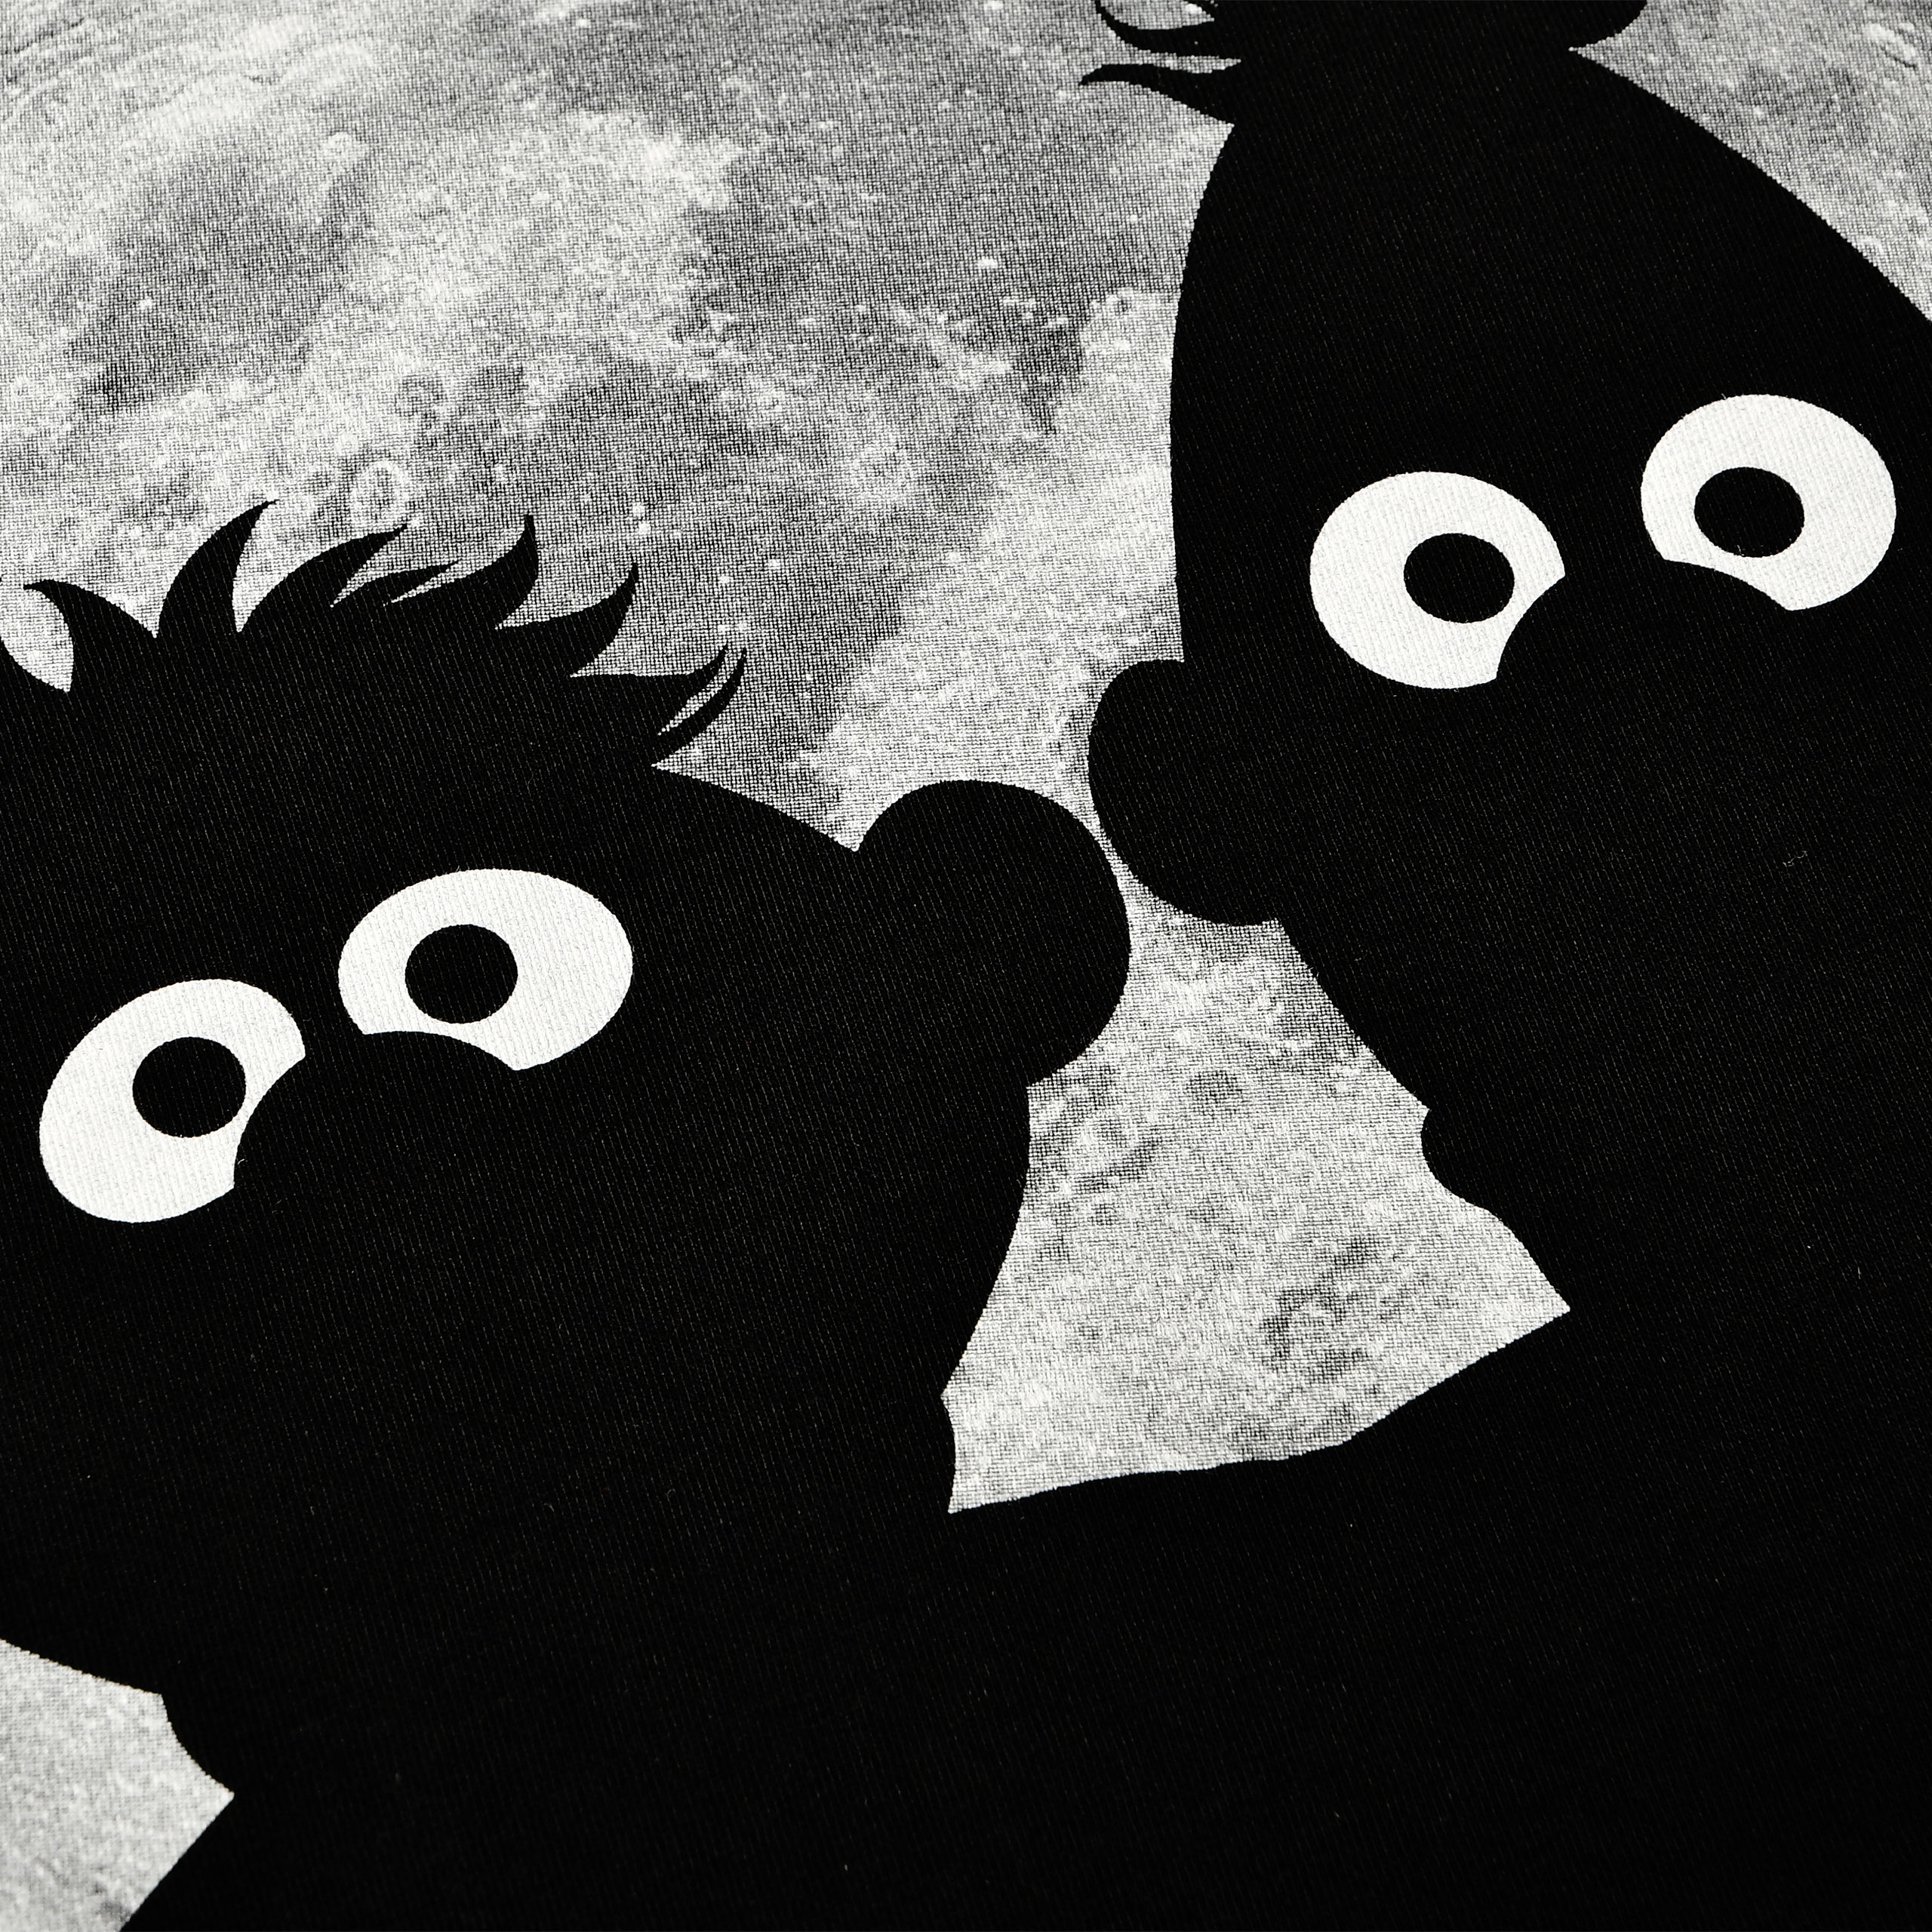 Sesamstraße - Ernie & Bert Moonnight T-Shirt schwarz